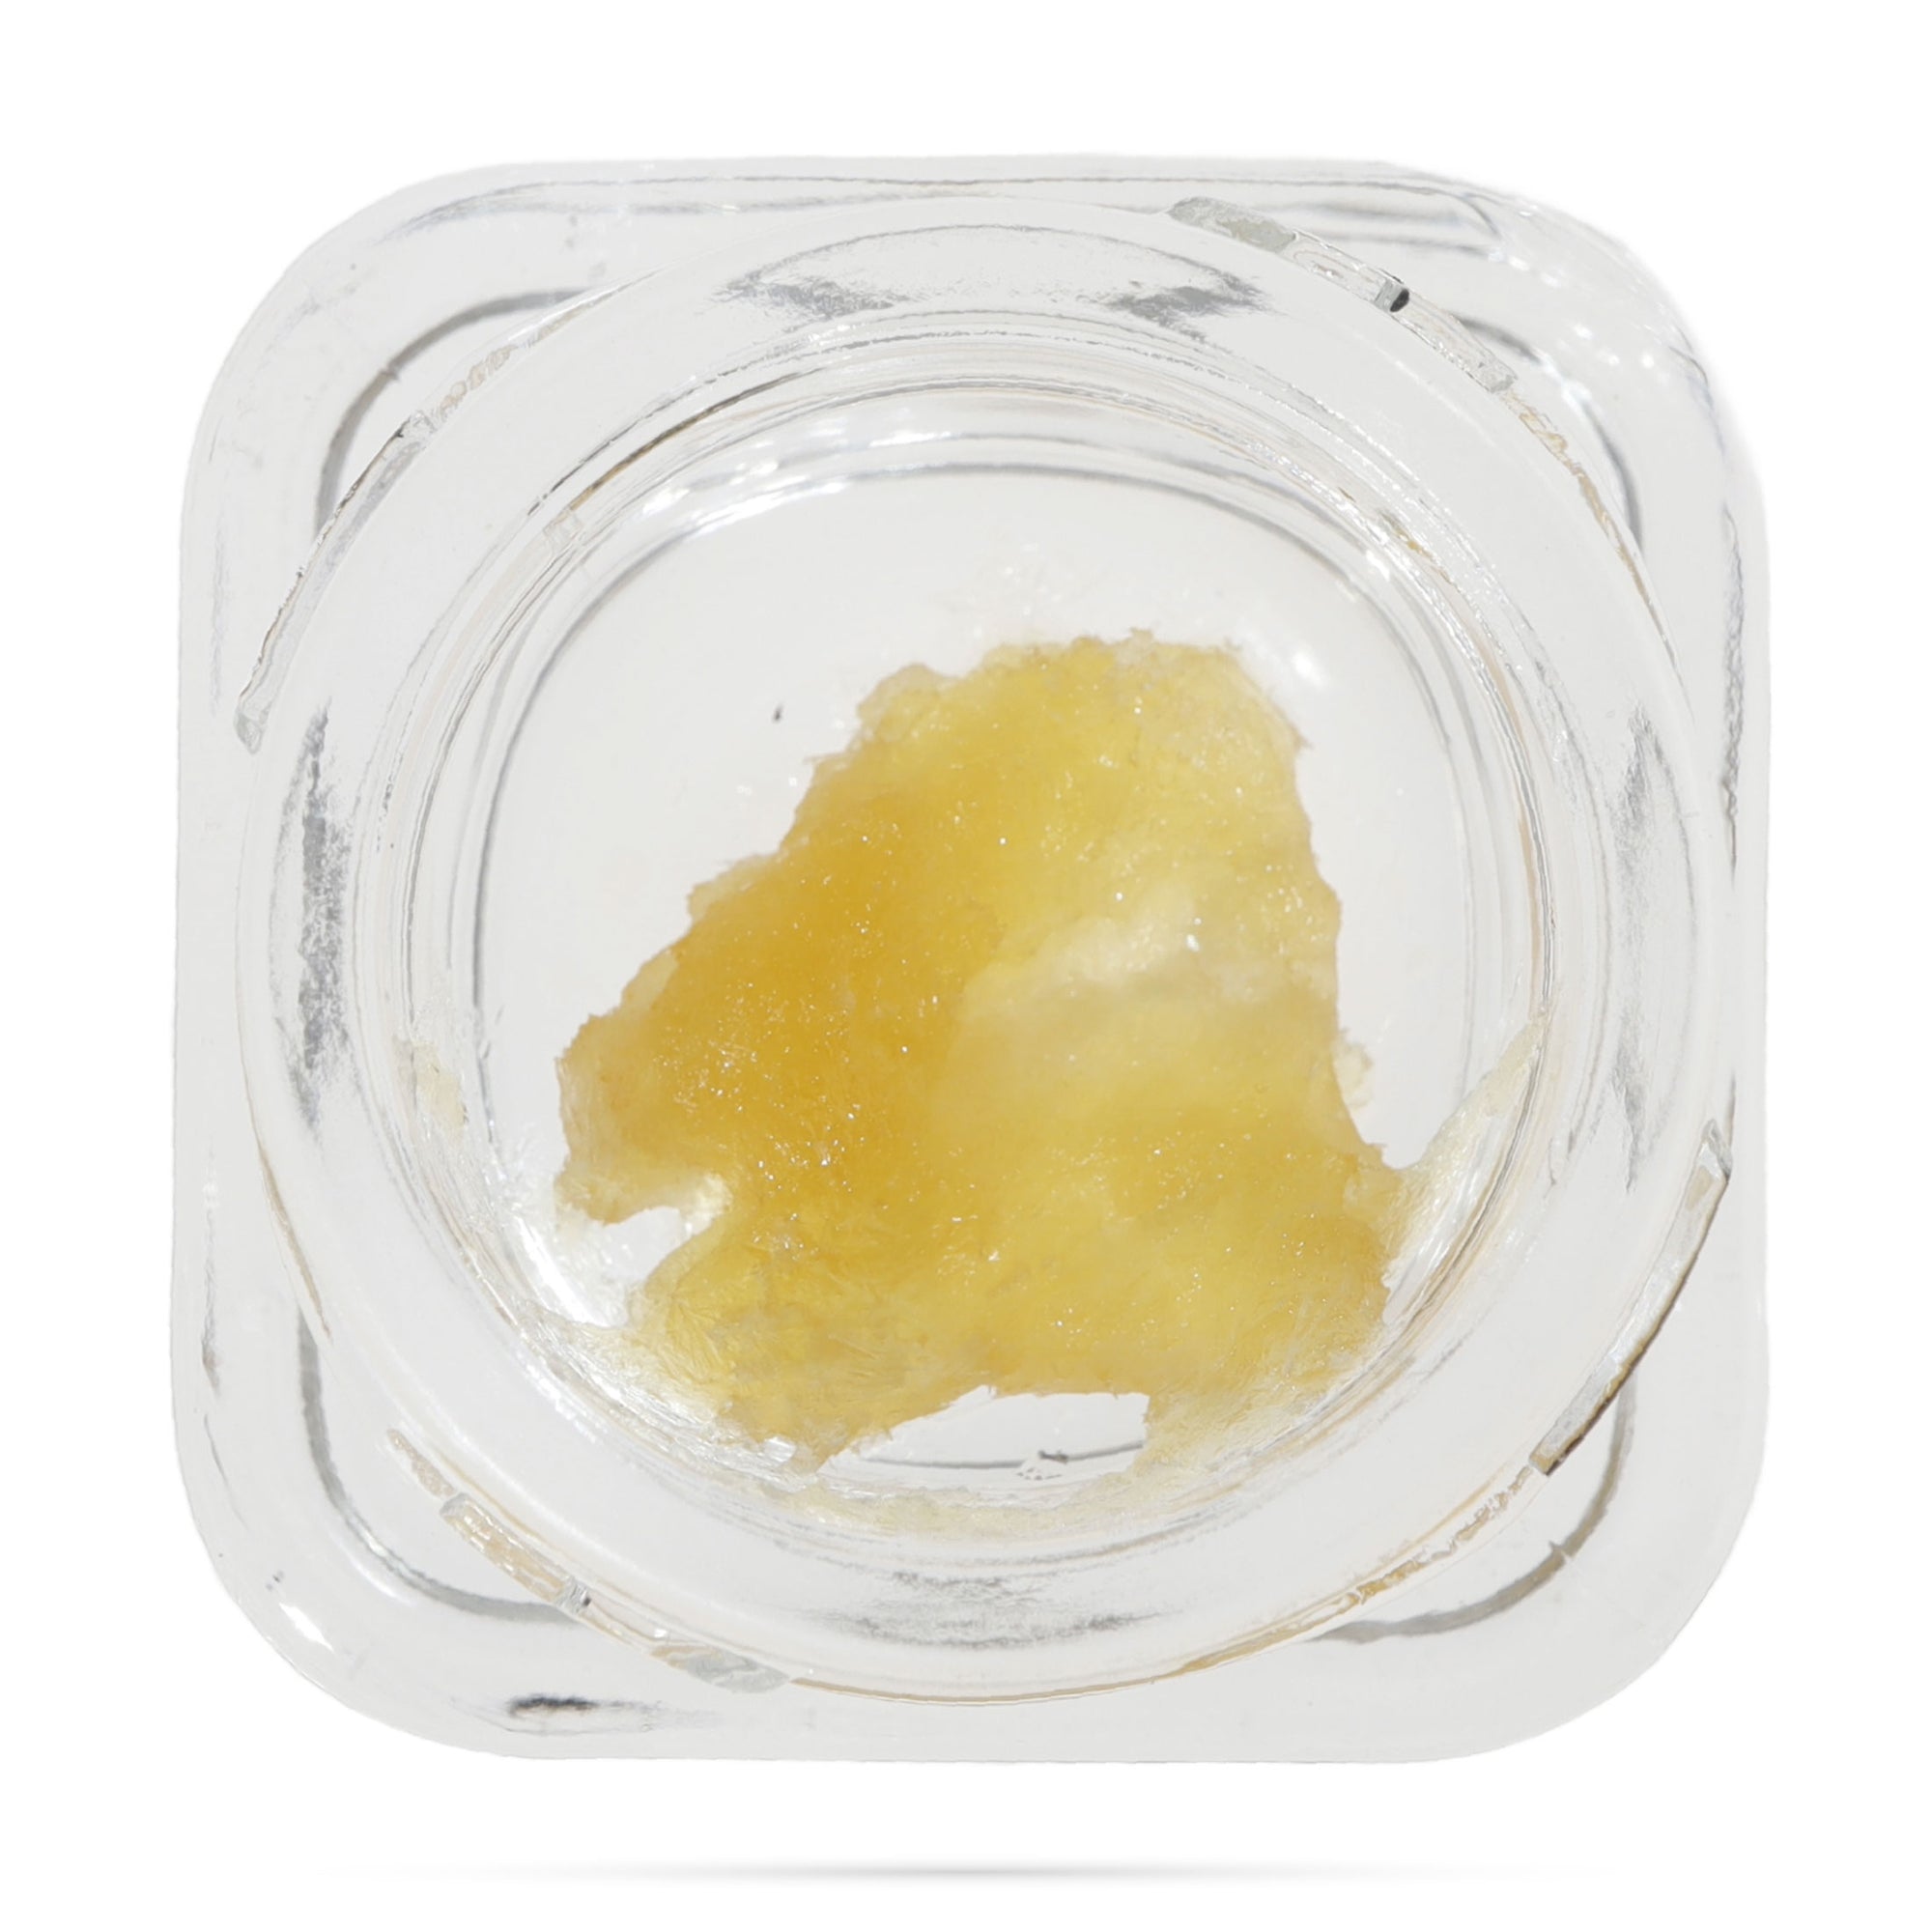 Image of a glass jar containing 1 gram of CBG Sugar Wax.